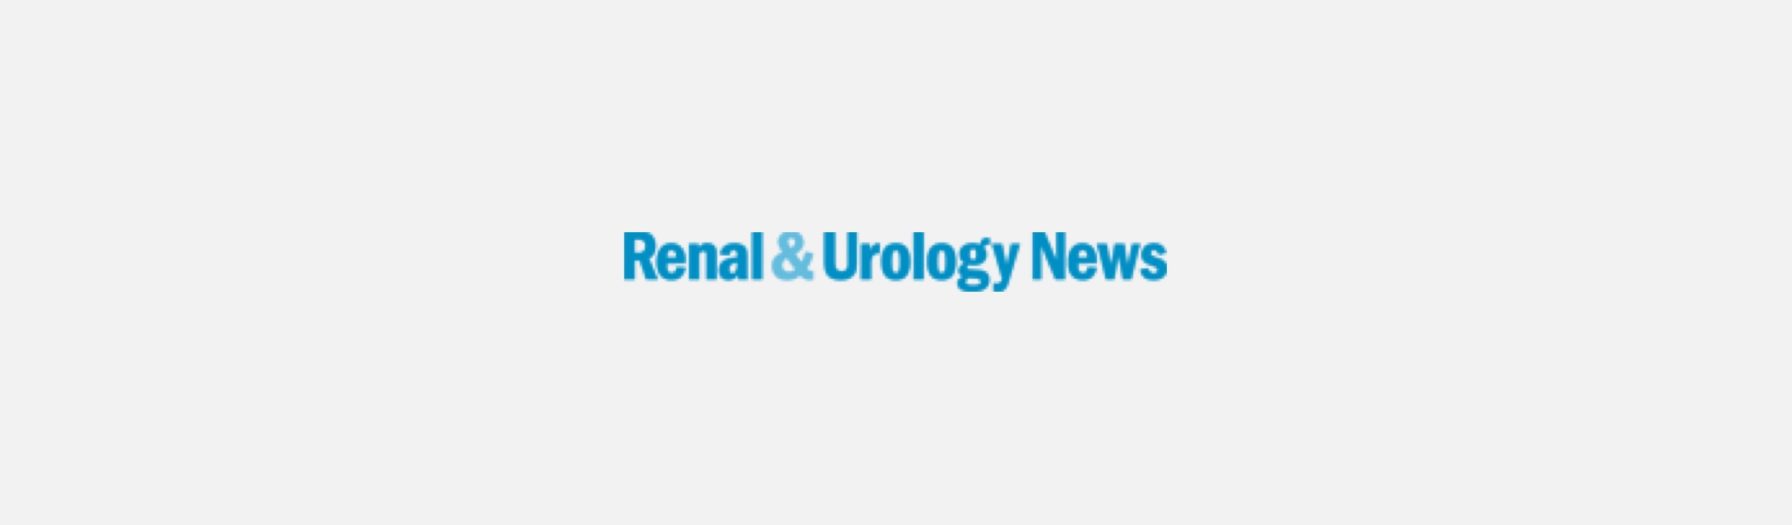  Renal and Urology News logo